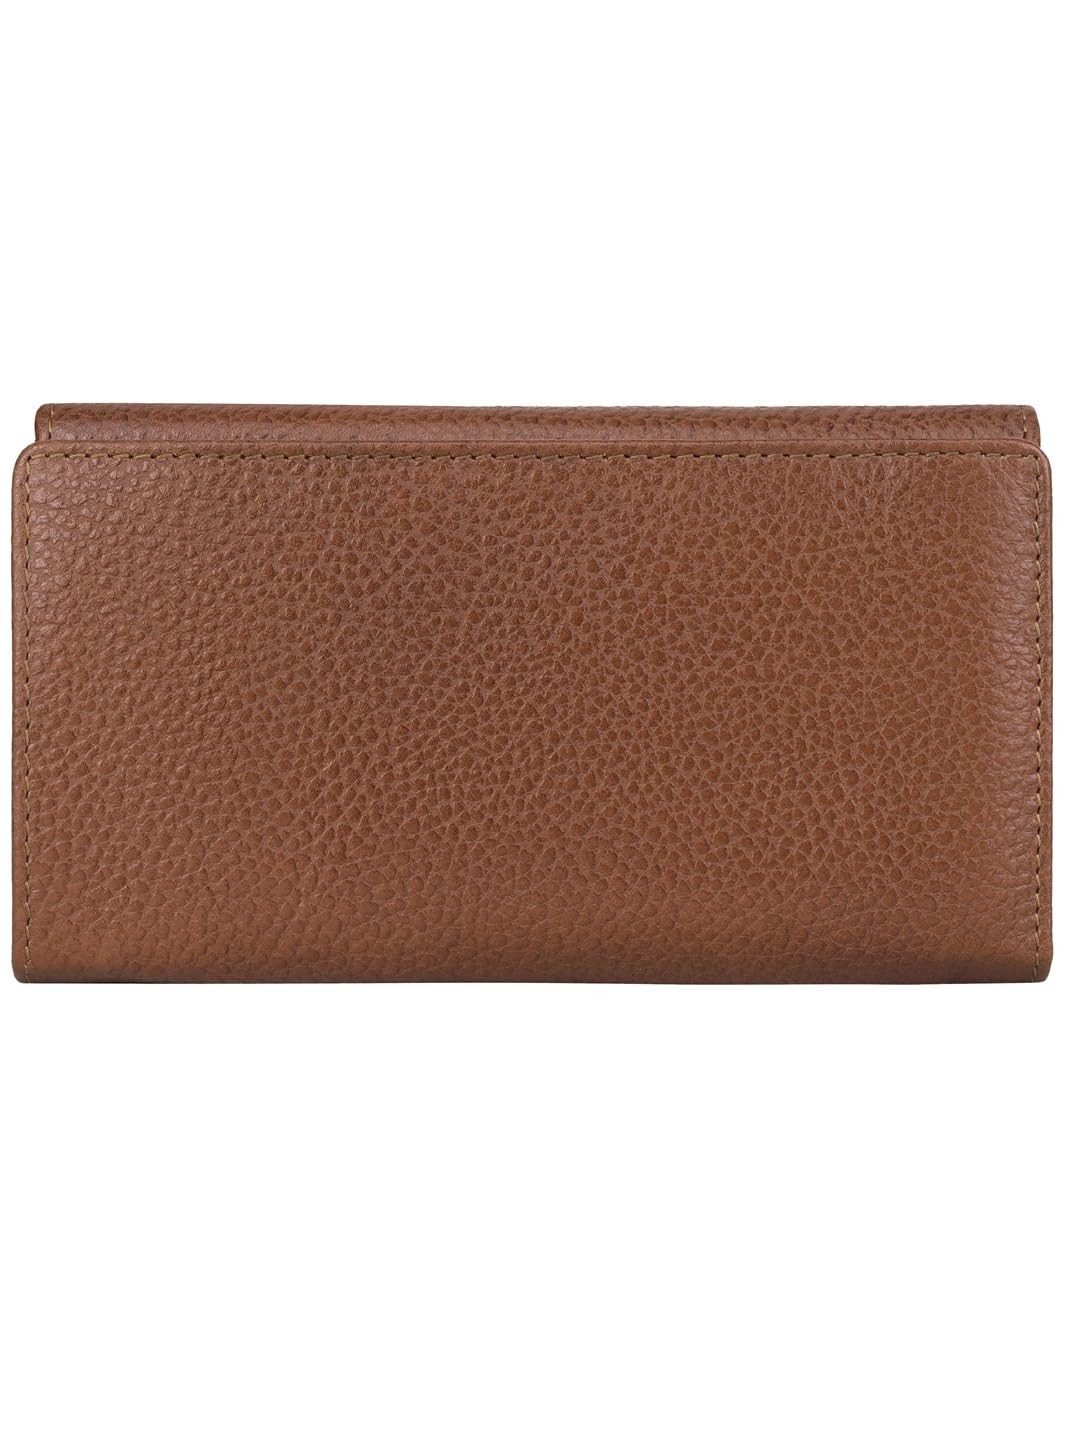 WildHorn Classic Leather Wallet for Men (Walnut1)